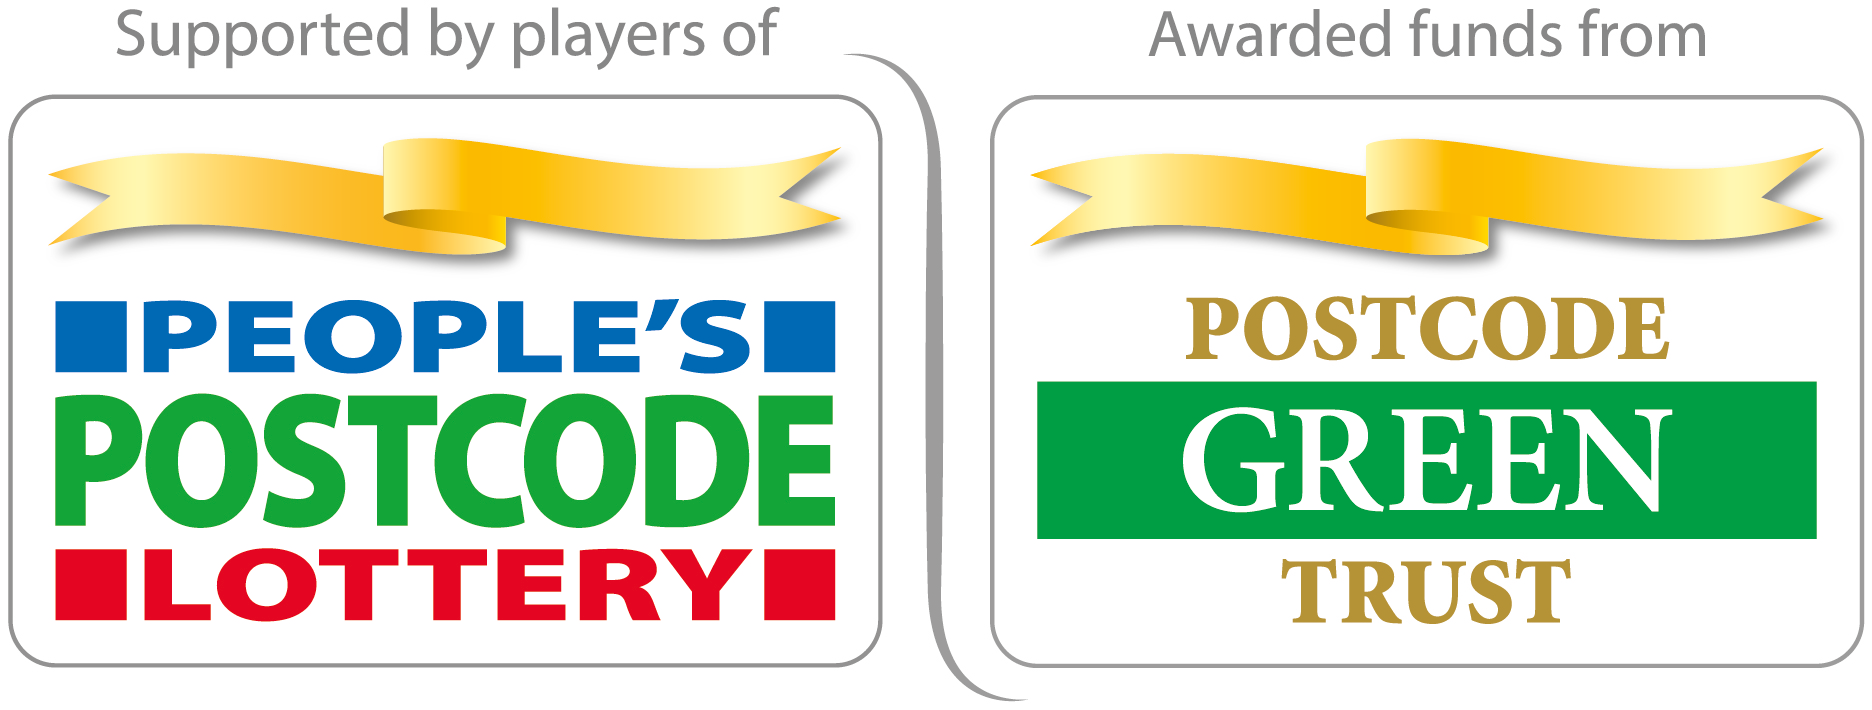 People's Postcode Lottery and Postcode Green Trust logo